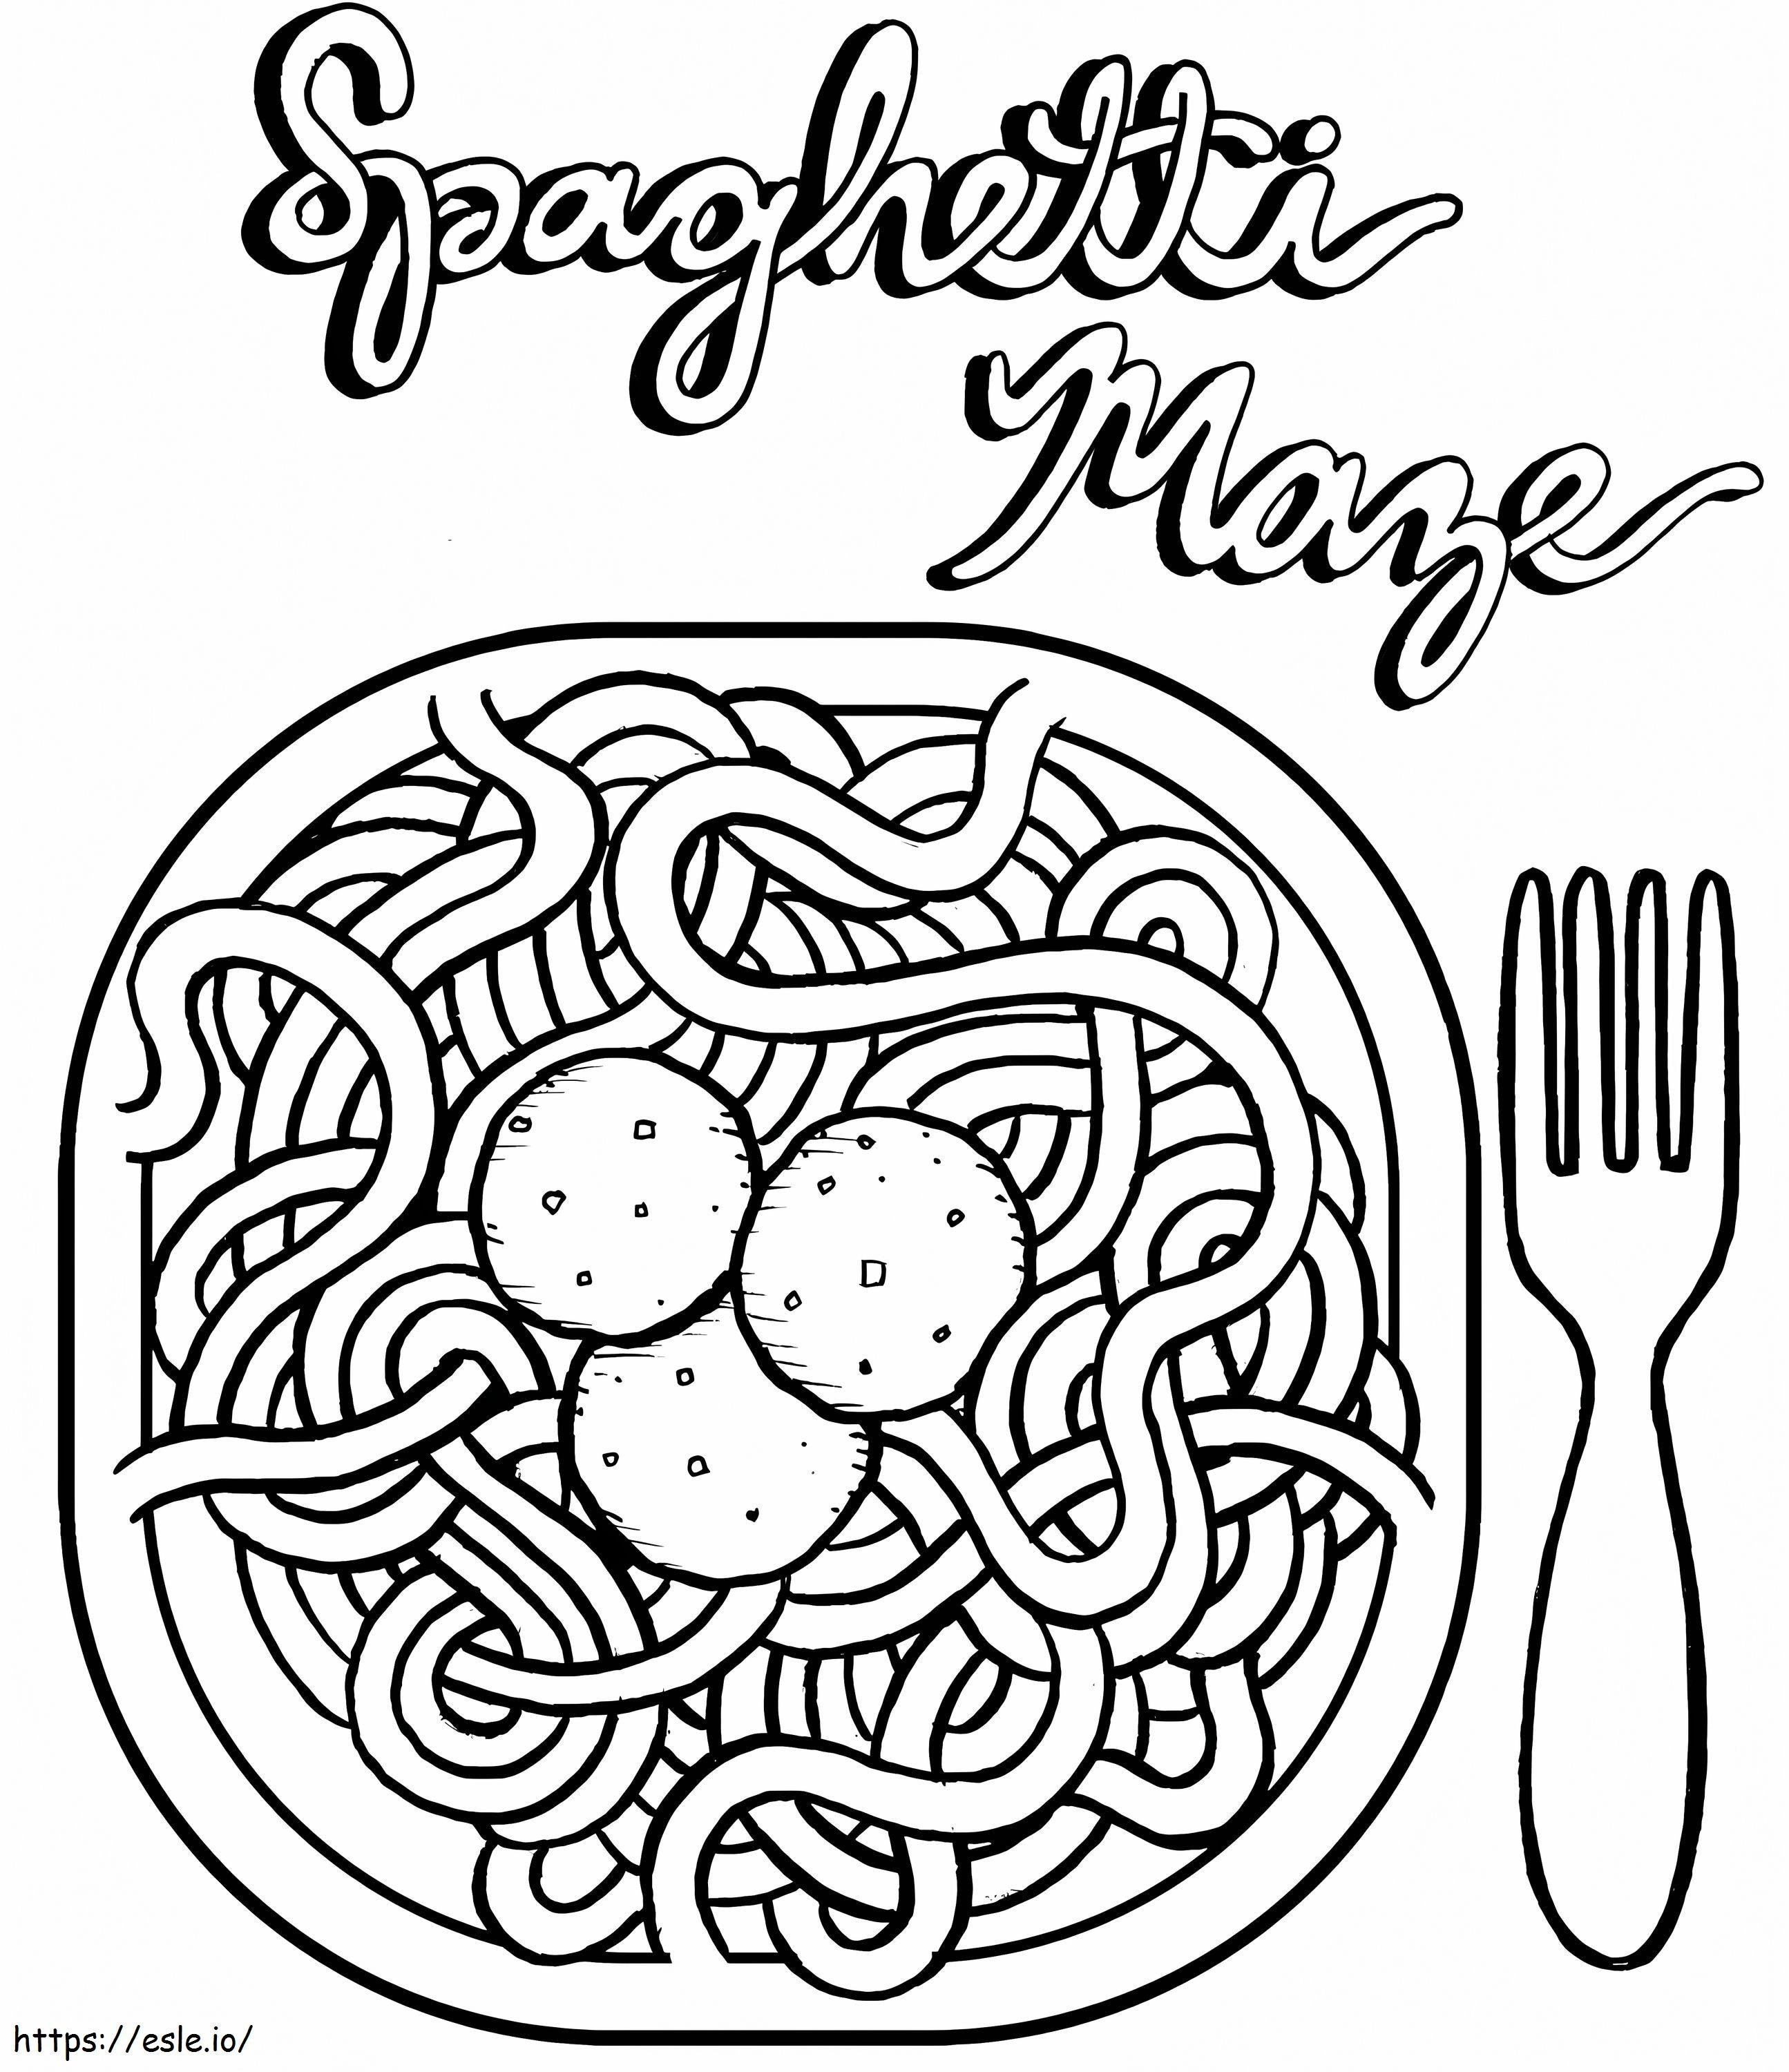 Makaron Spaghetti I Klopsiki kolorowanka